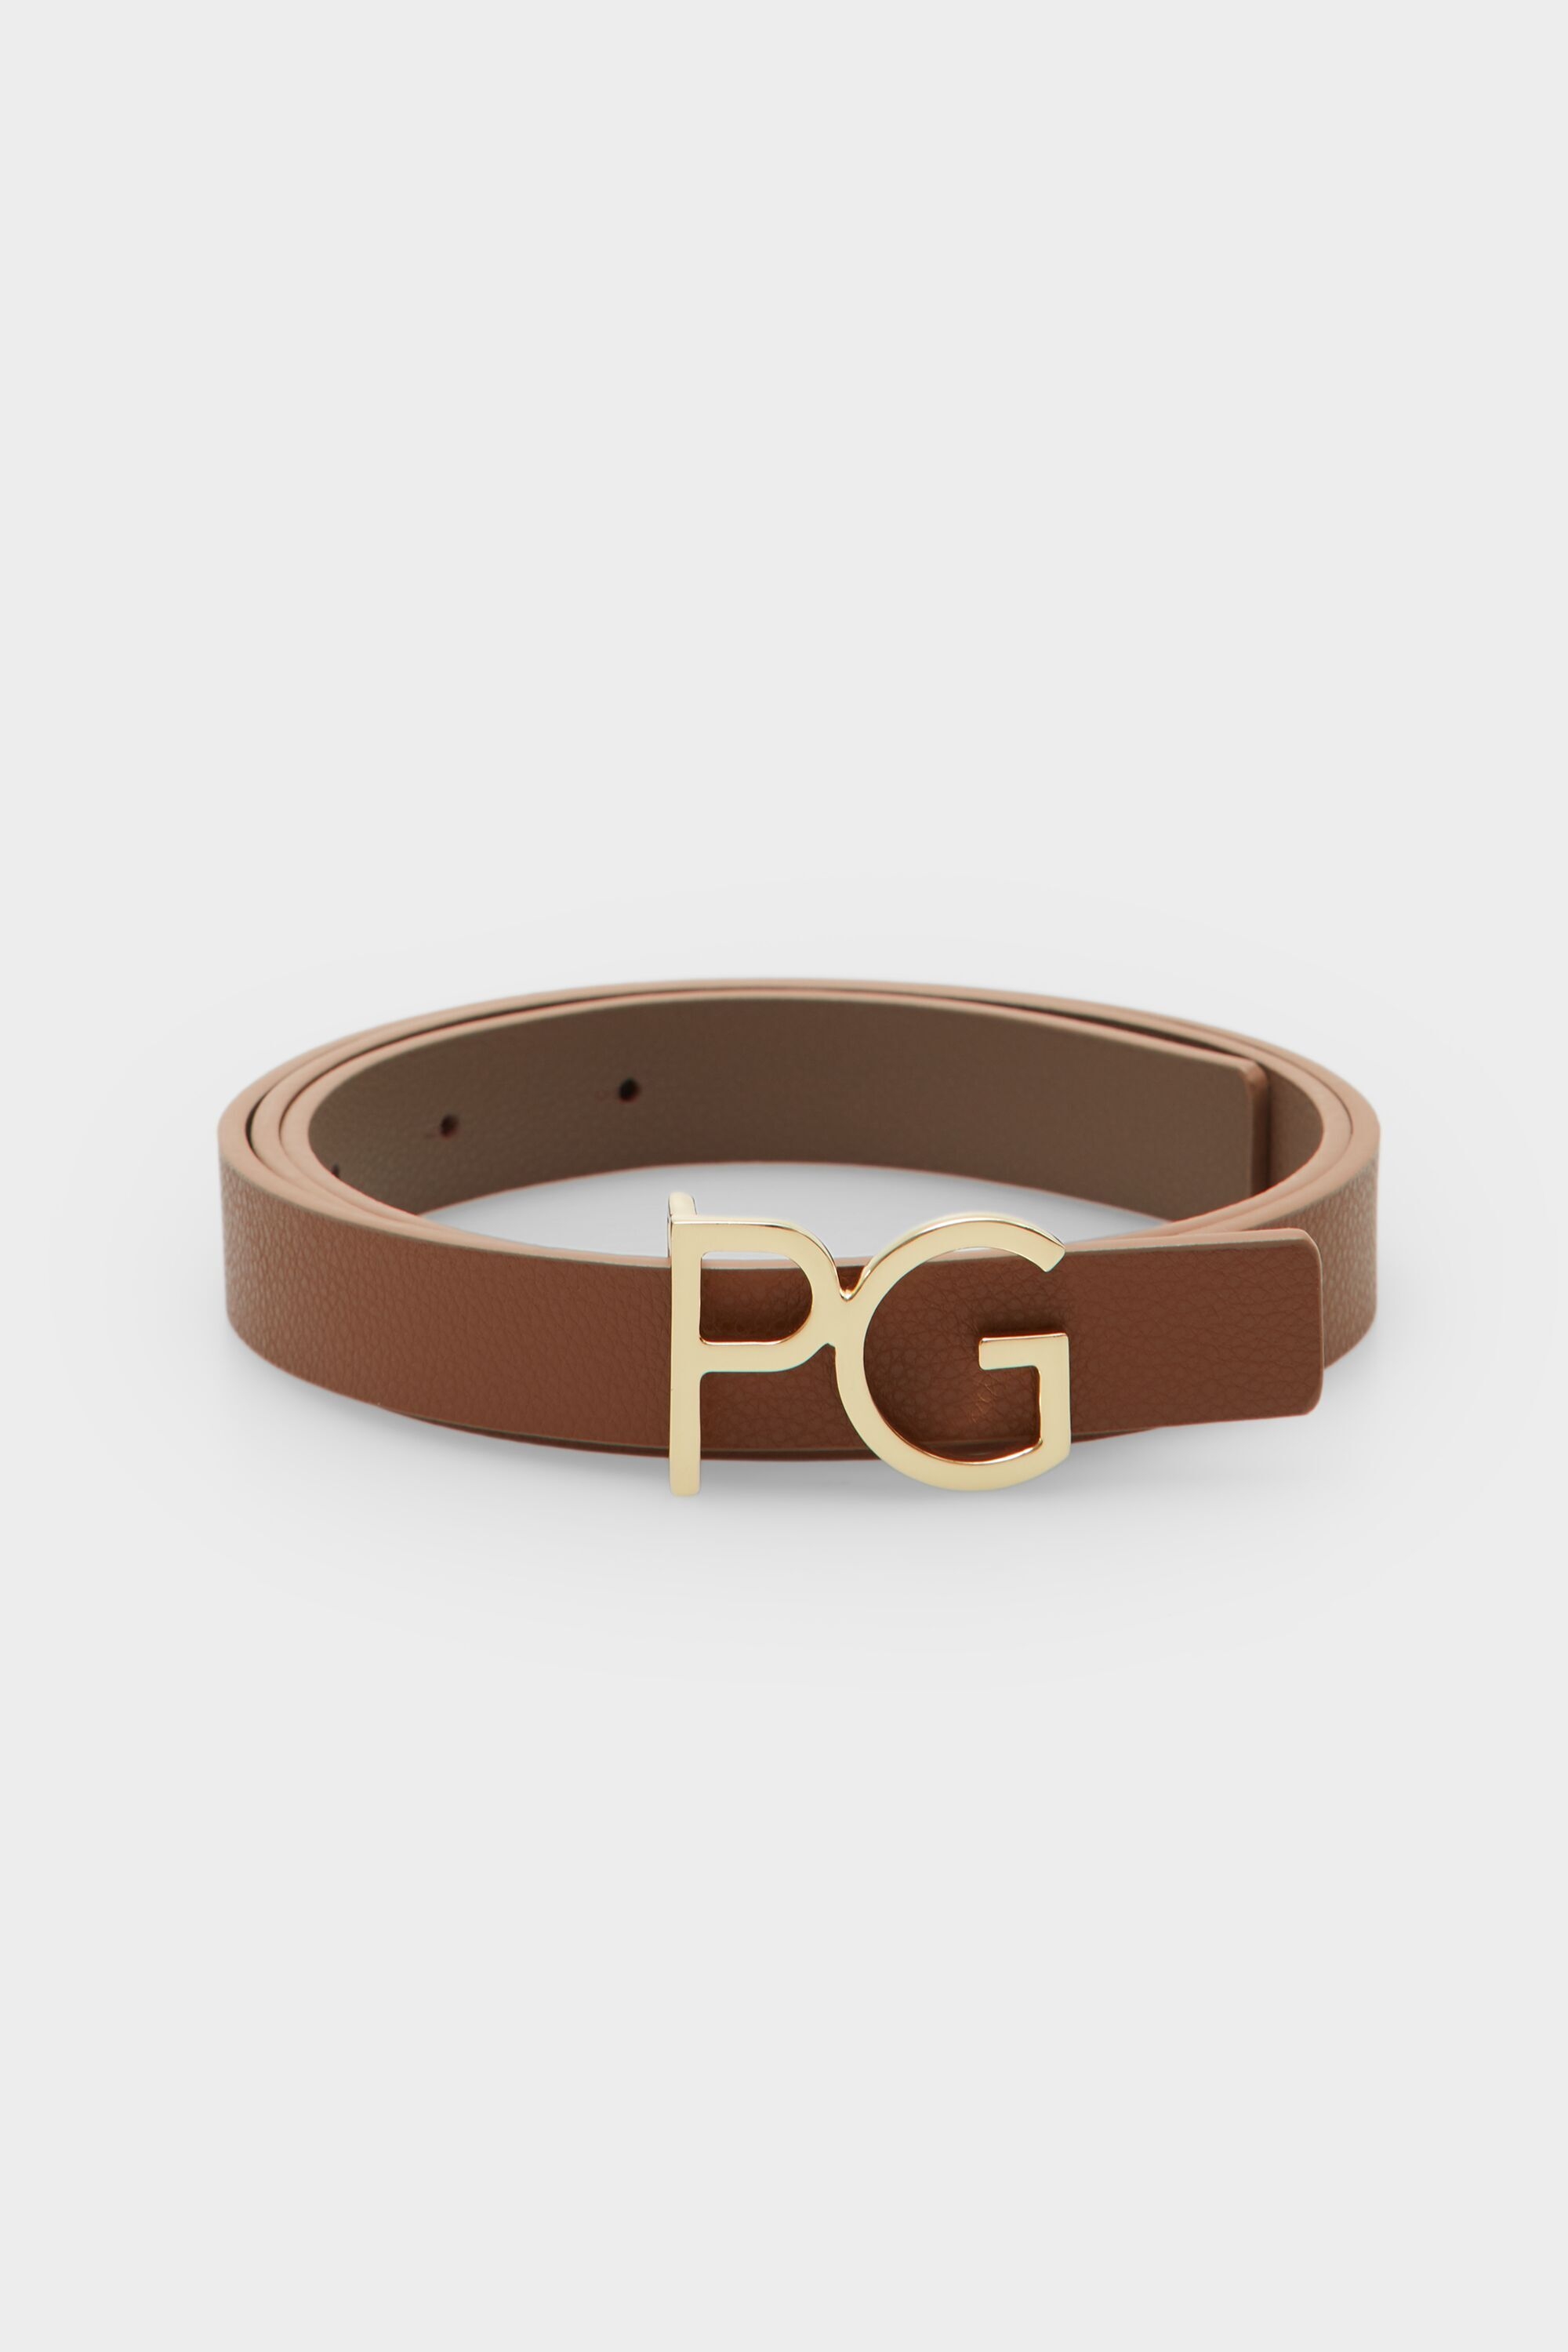 PG leather belt